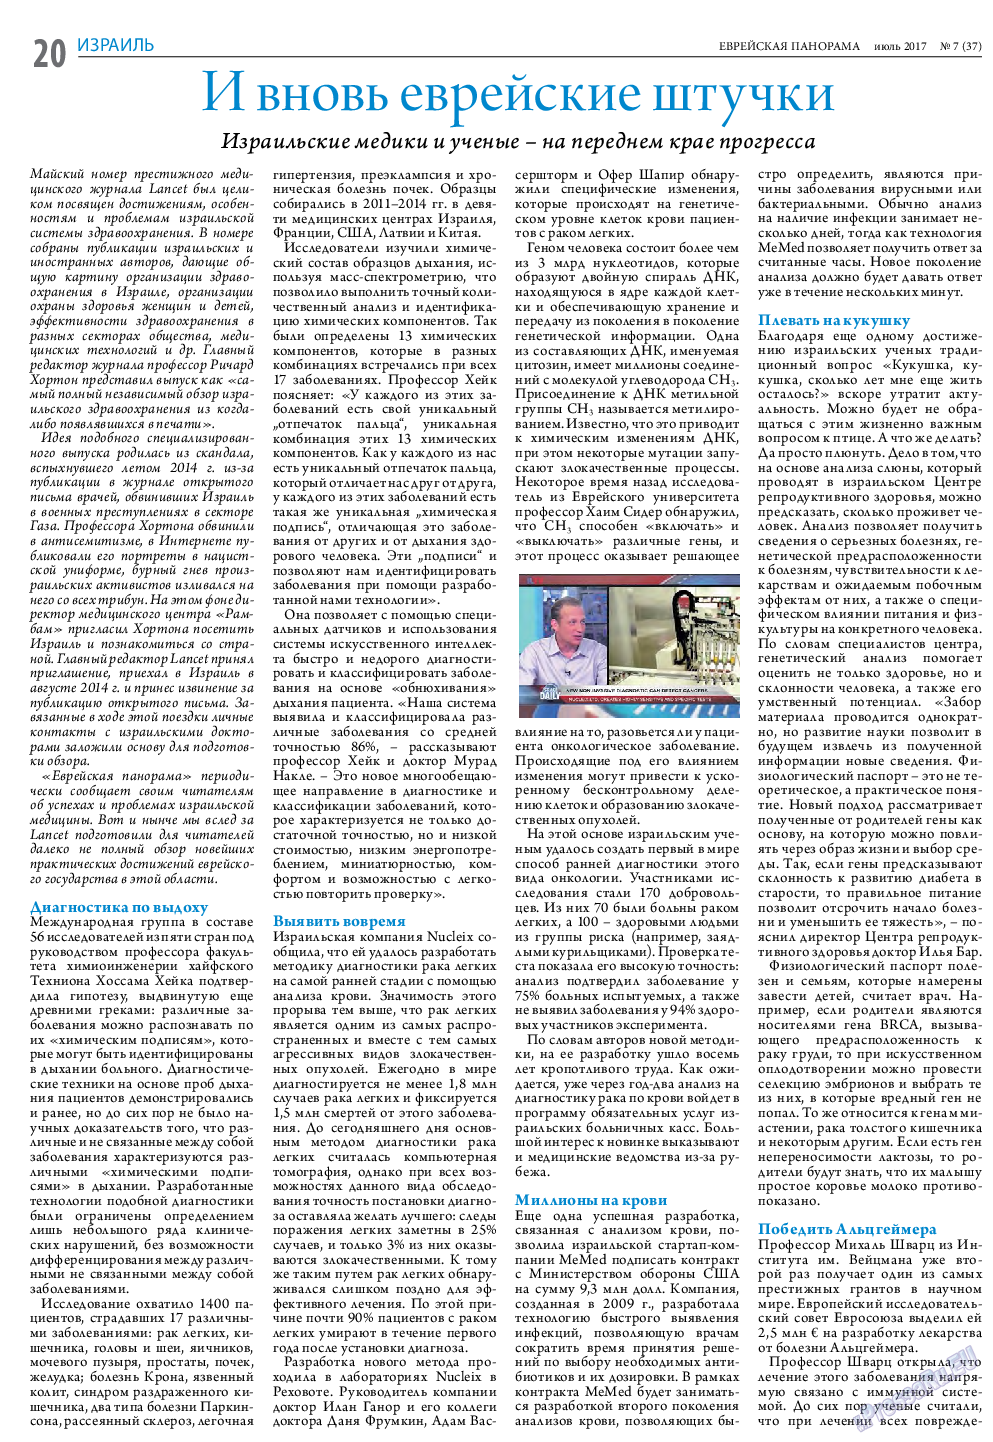 Еврейская панорама, газета. 2017 №7 стр.20